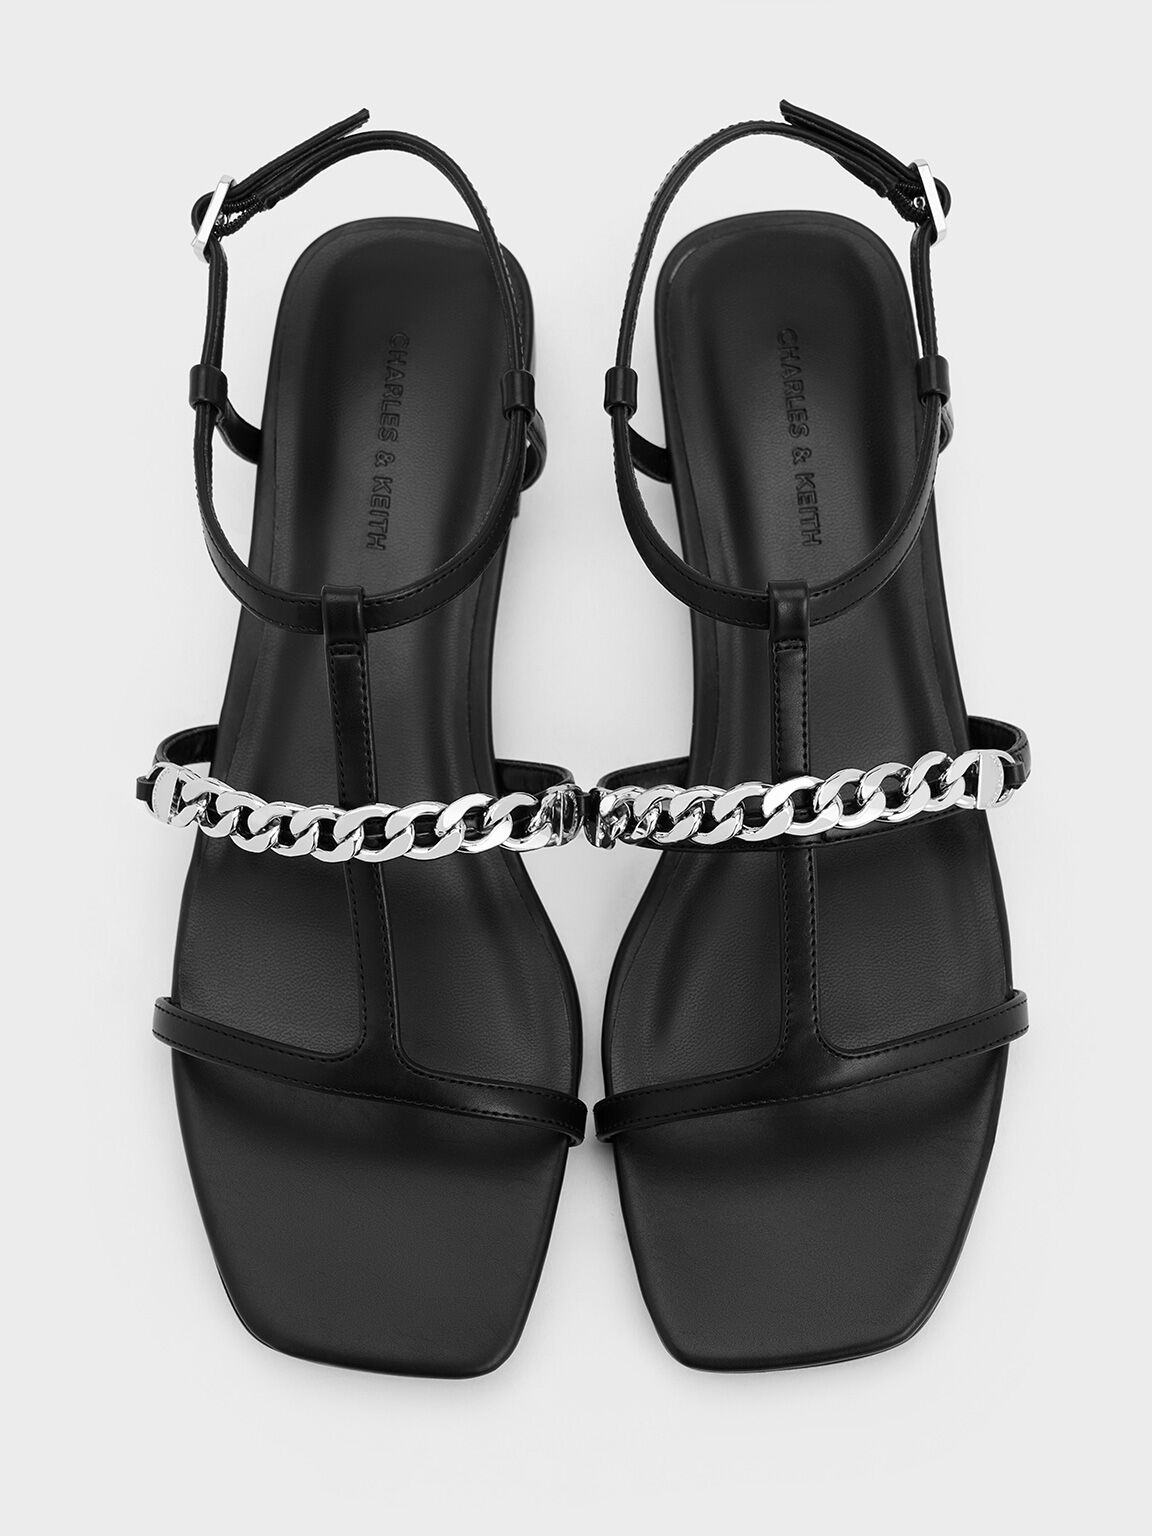 T-Bar Chain-Link Sandals, Black, hi-res